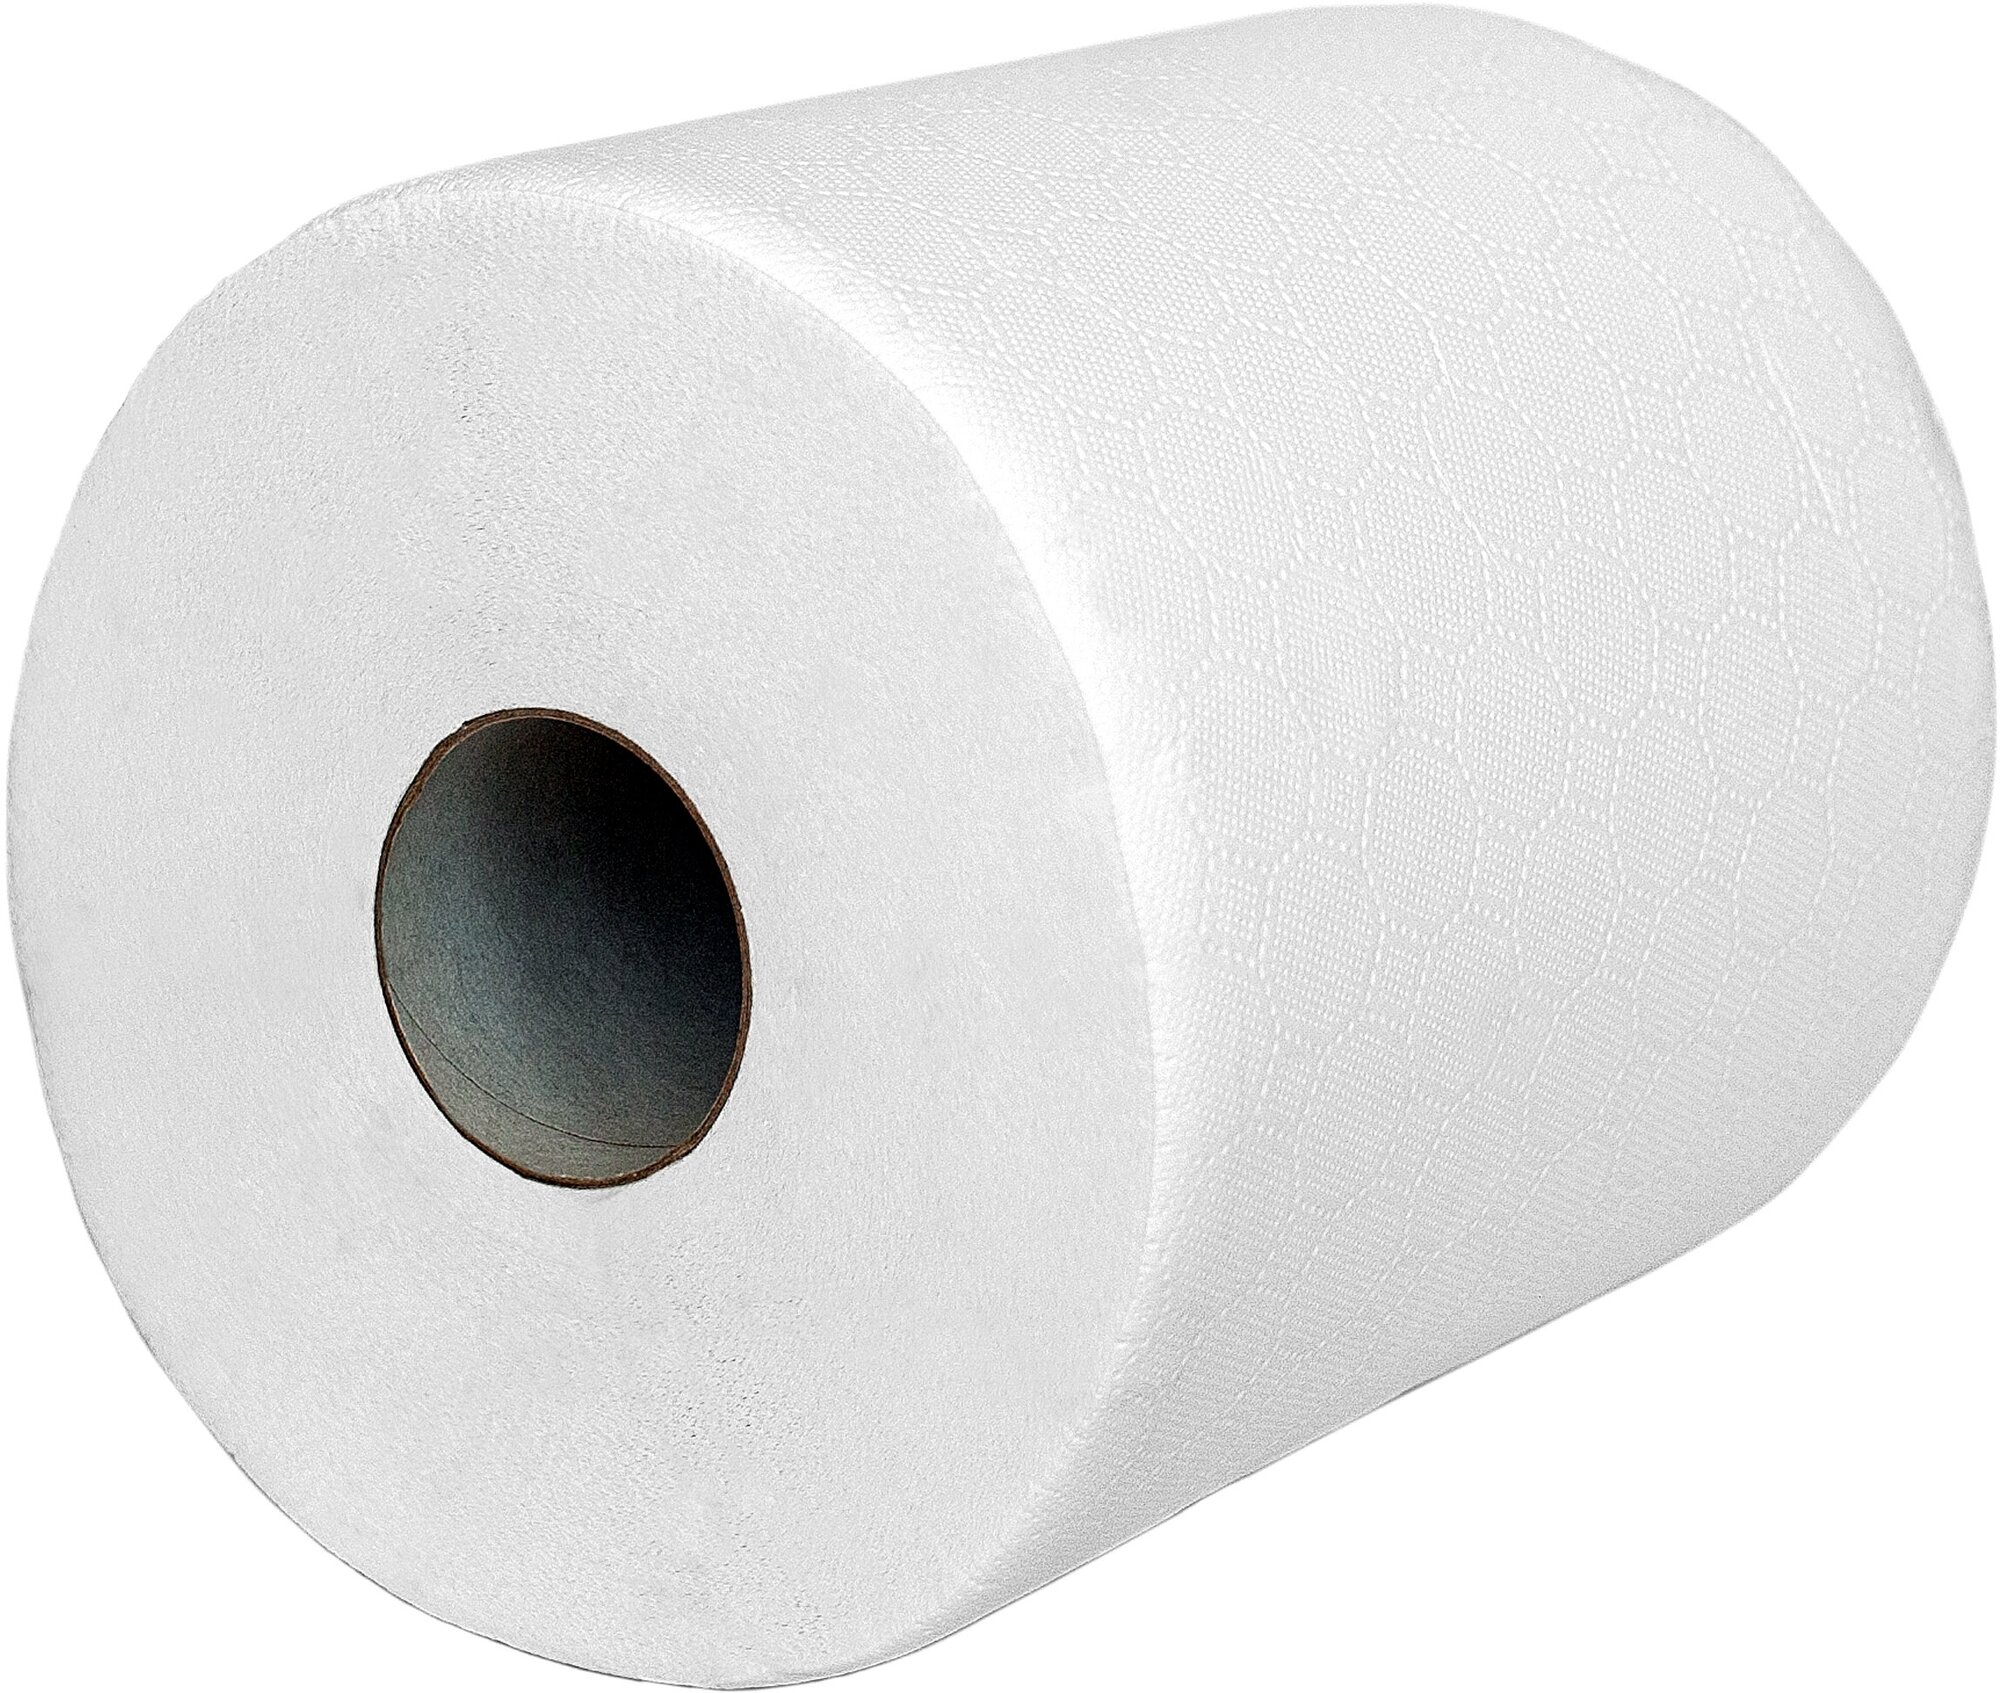 Бумажные полотенца Belux BIG RoLL 2 слоя 1 рулон 94,5м белые